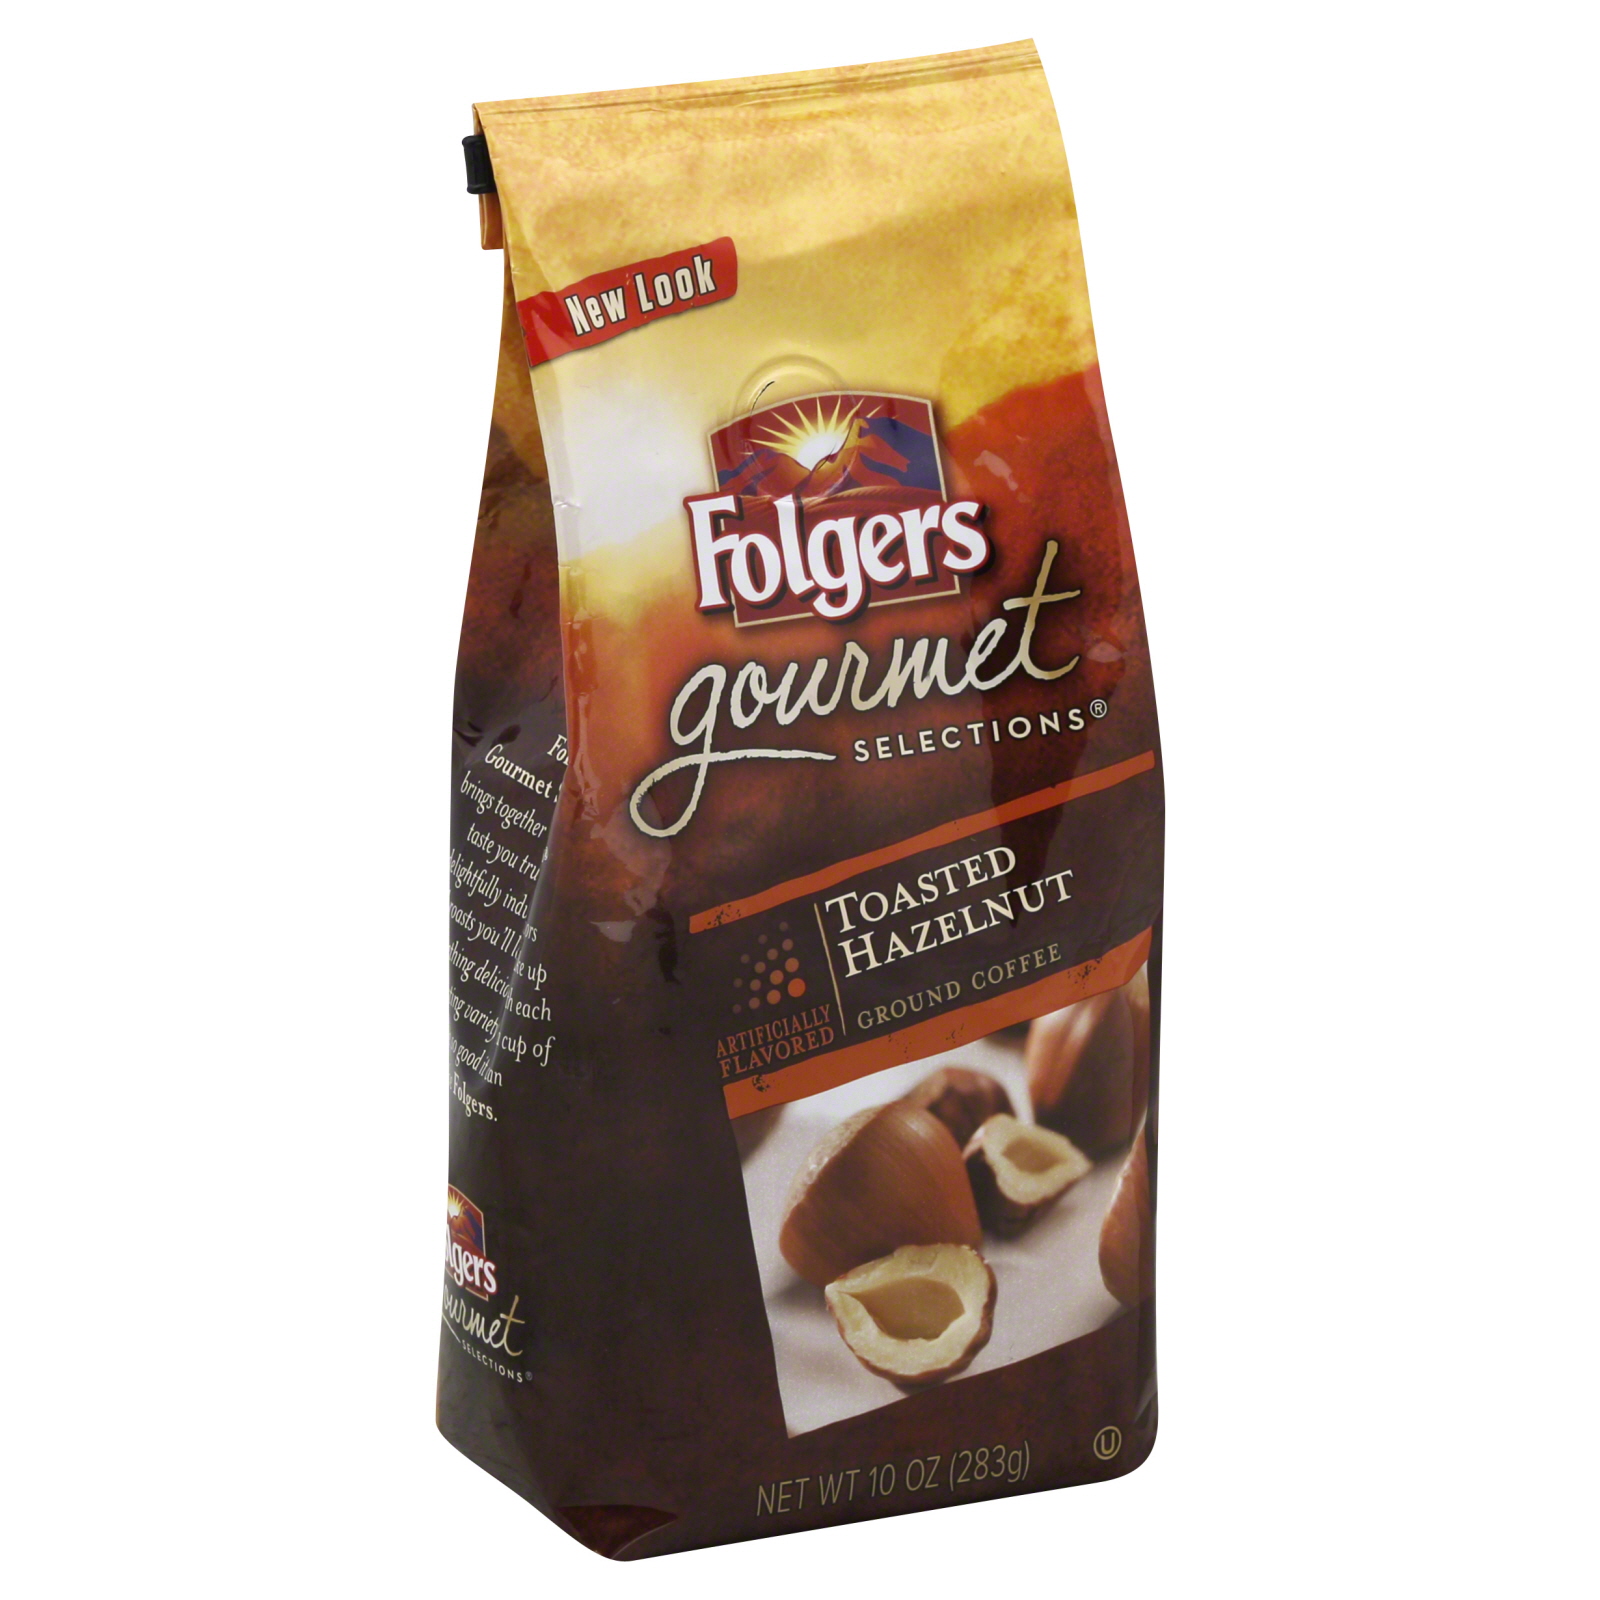 Folgers Gourmet, Toasted Hazelnut Ground Coffee, 10 oz